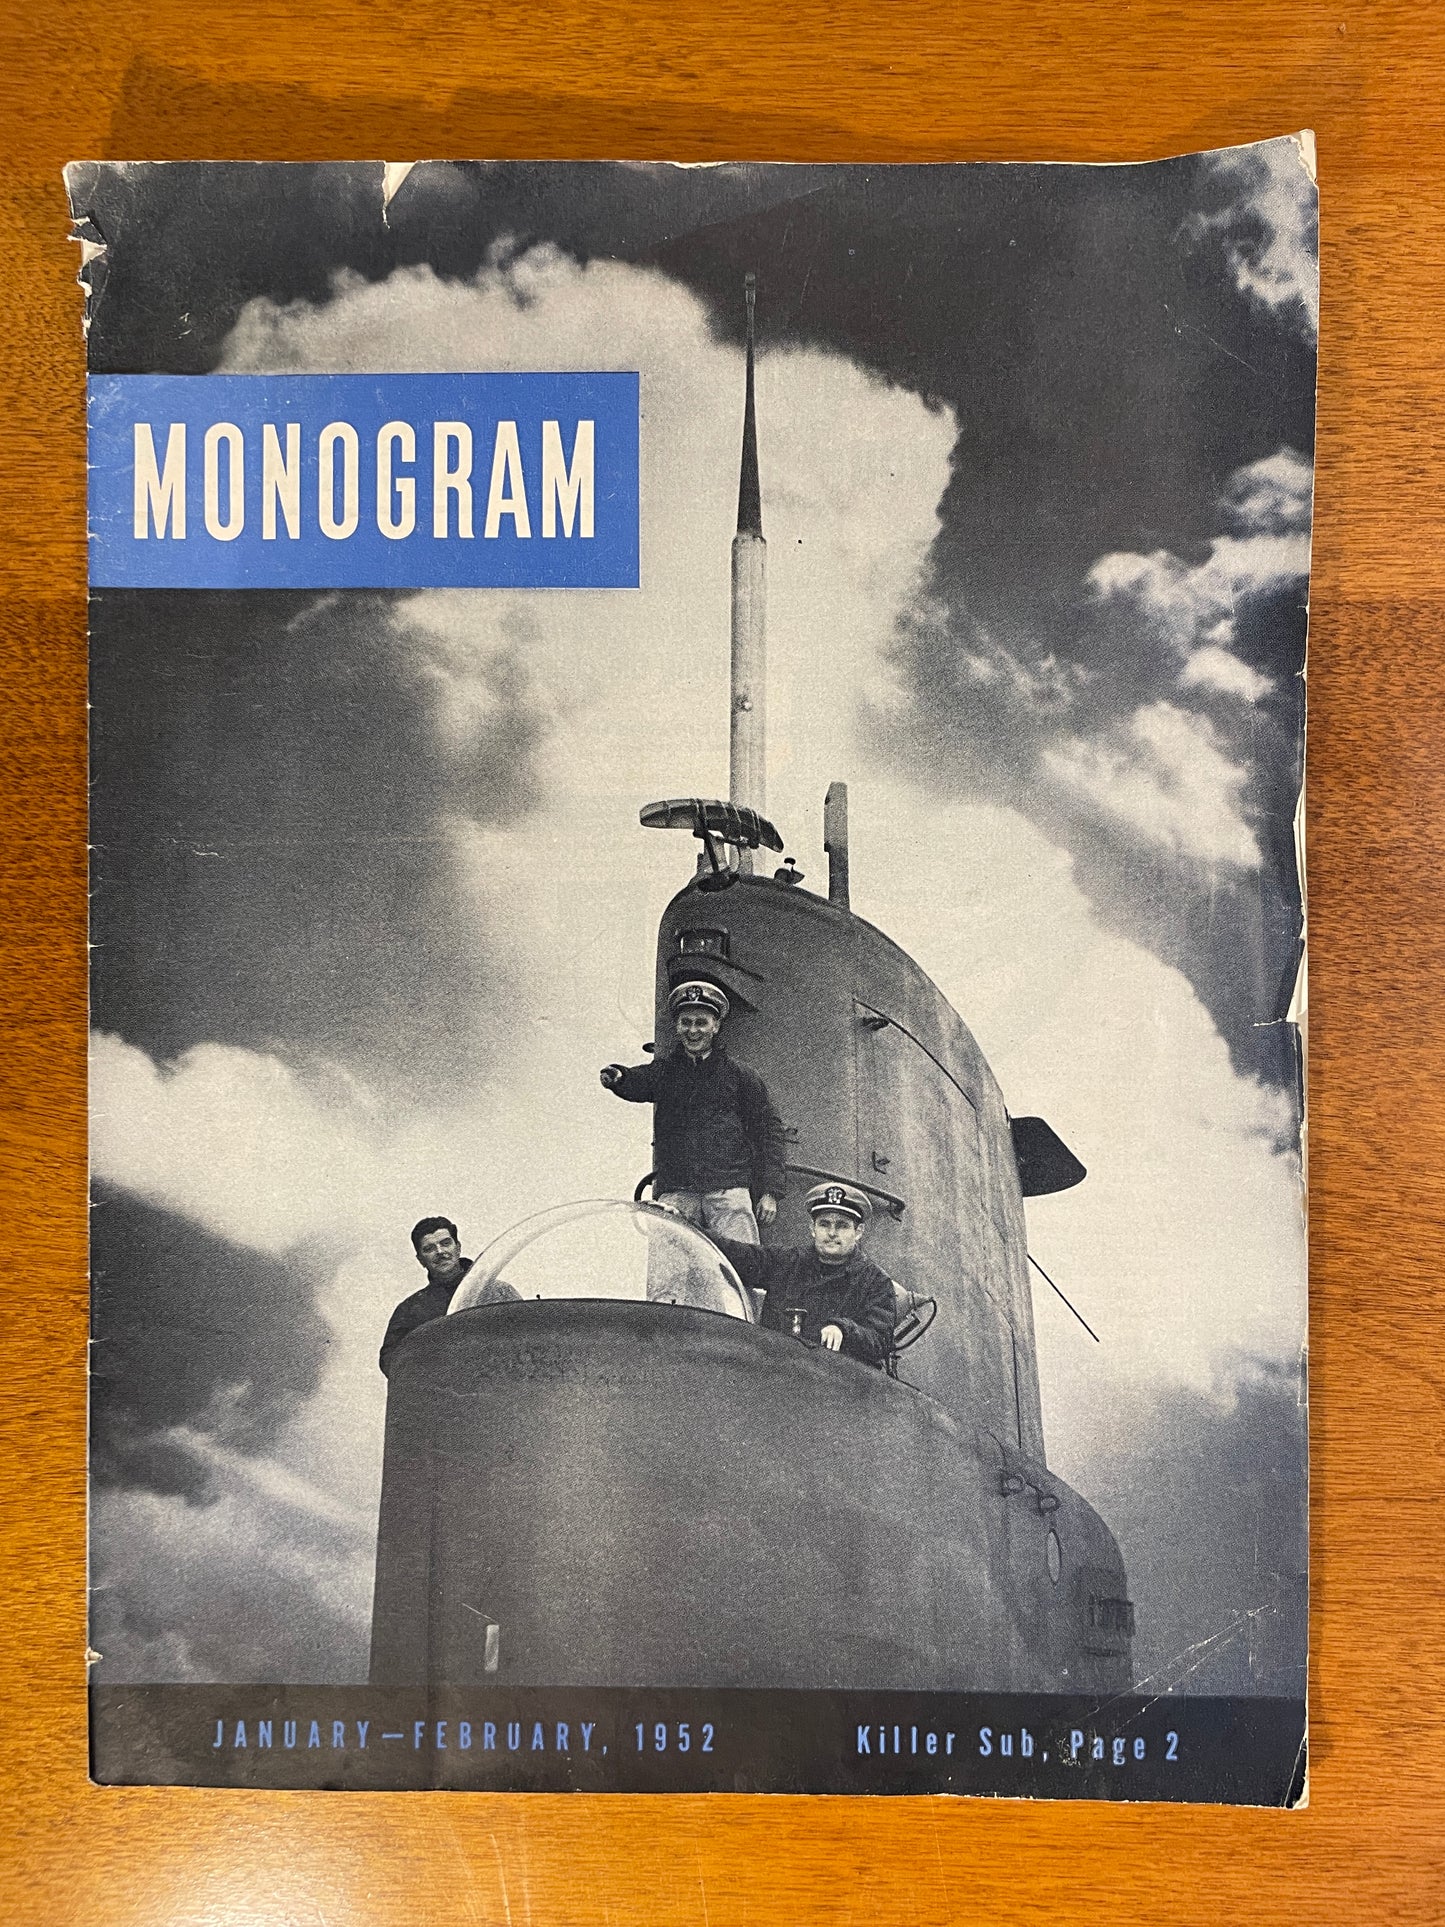 Monogram magazine Vol. 29 No. 1, January -February 1952 Killer Sub, General Electric Monogram G.E.